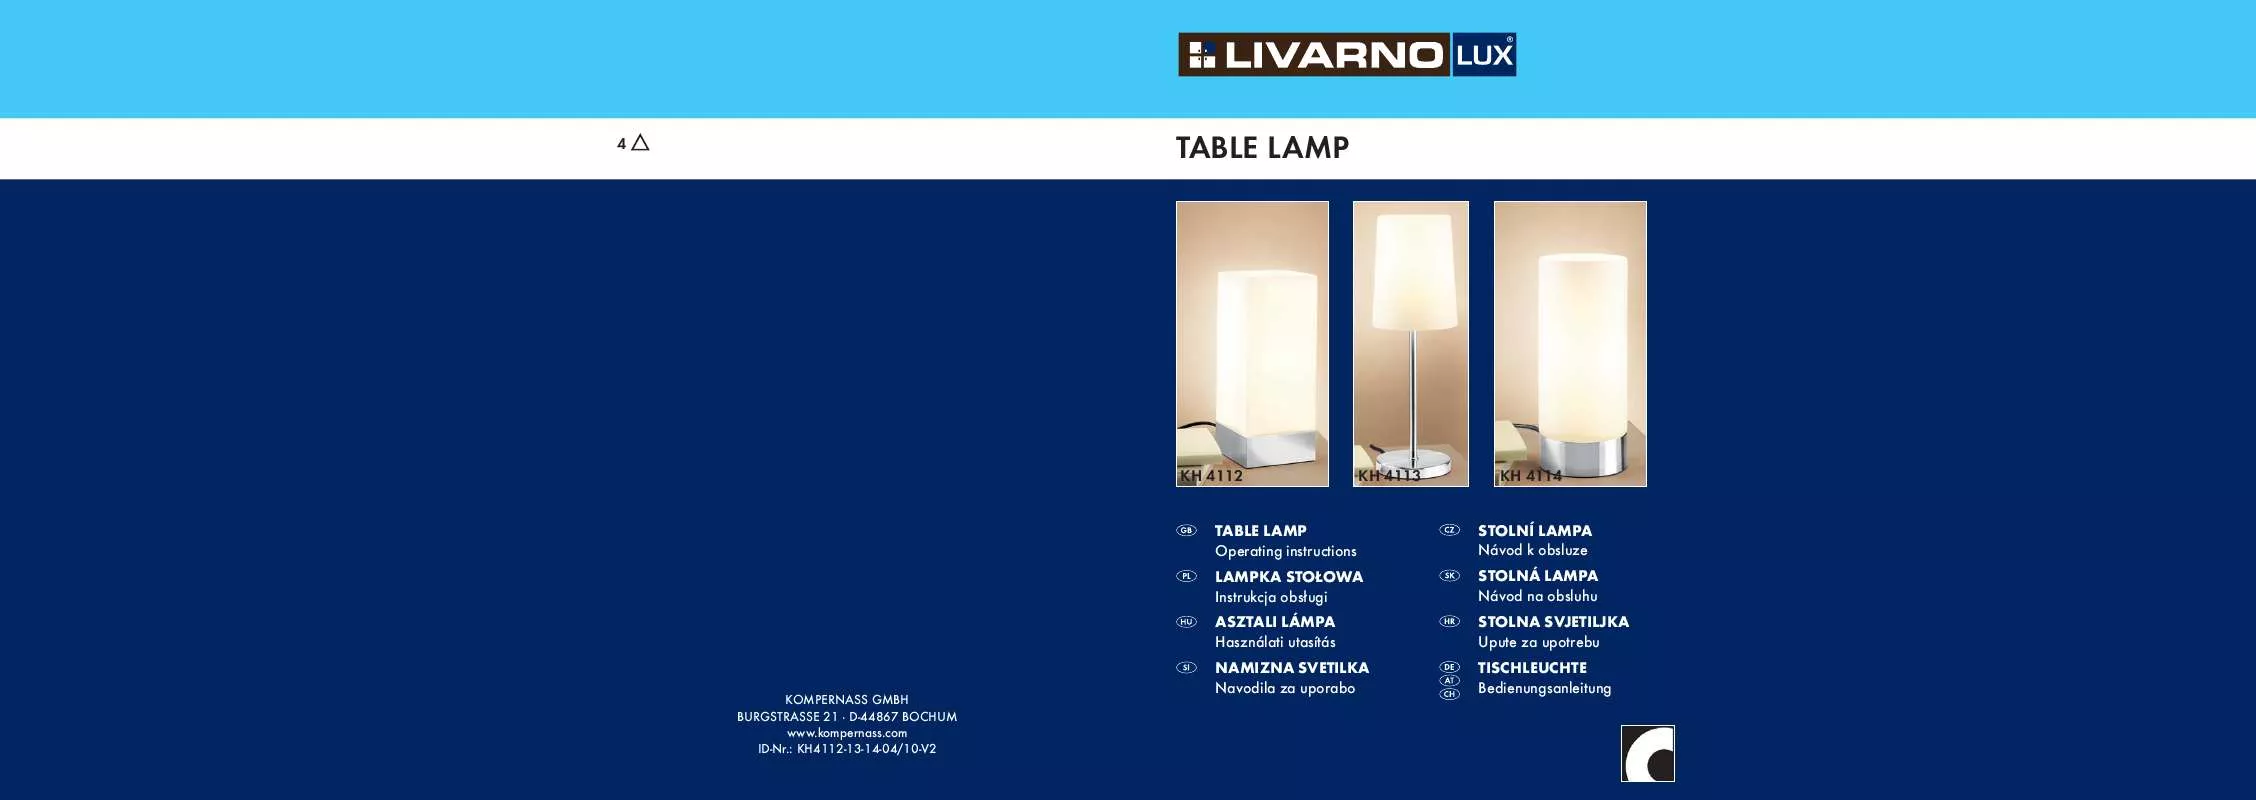 Mode d'emploi LIVARNO KH 4112-4114 TABLE LAMP